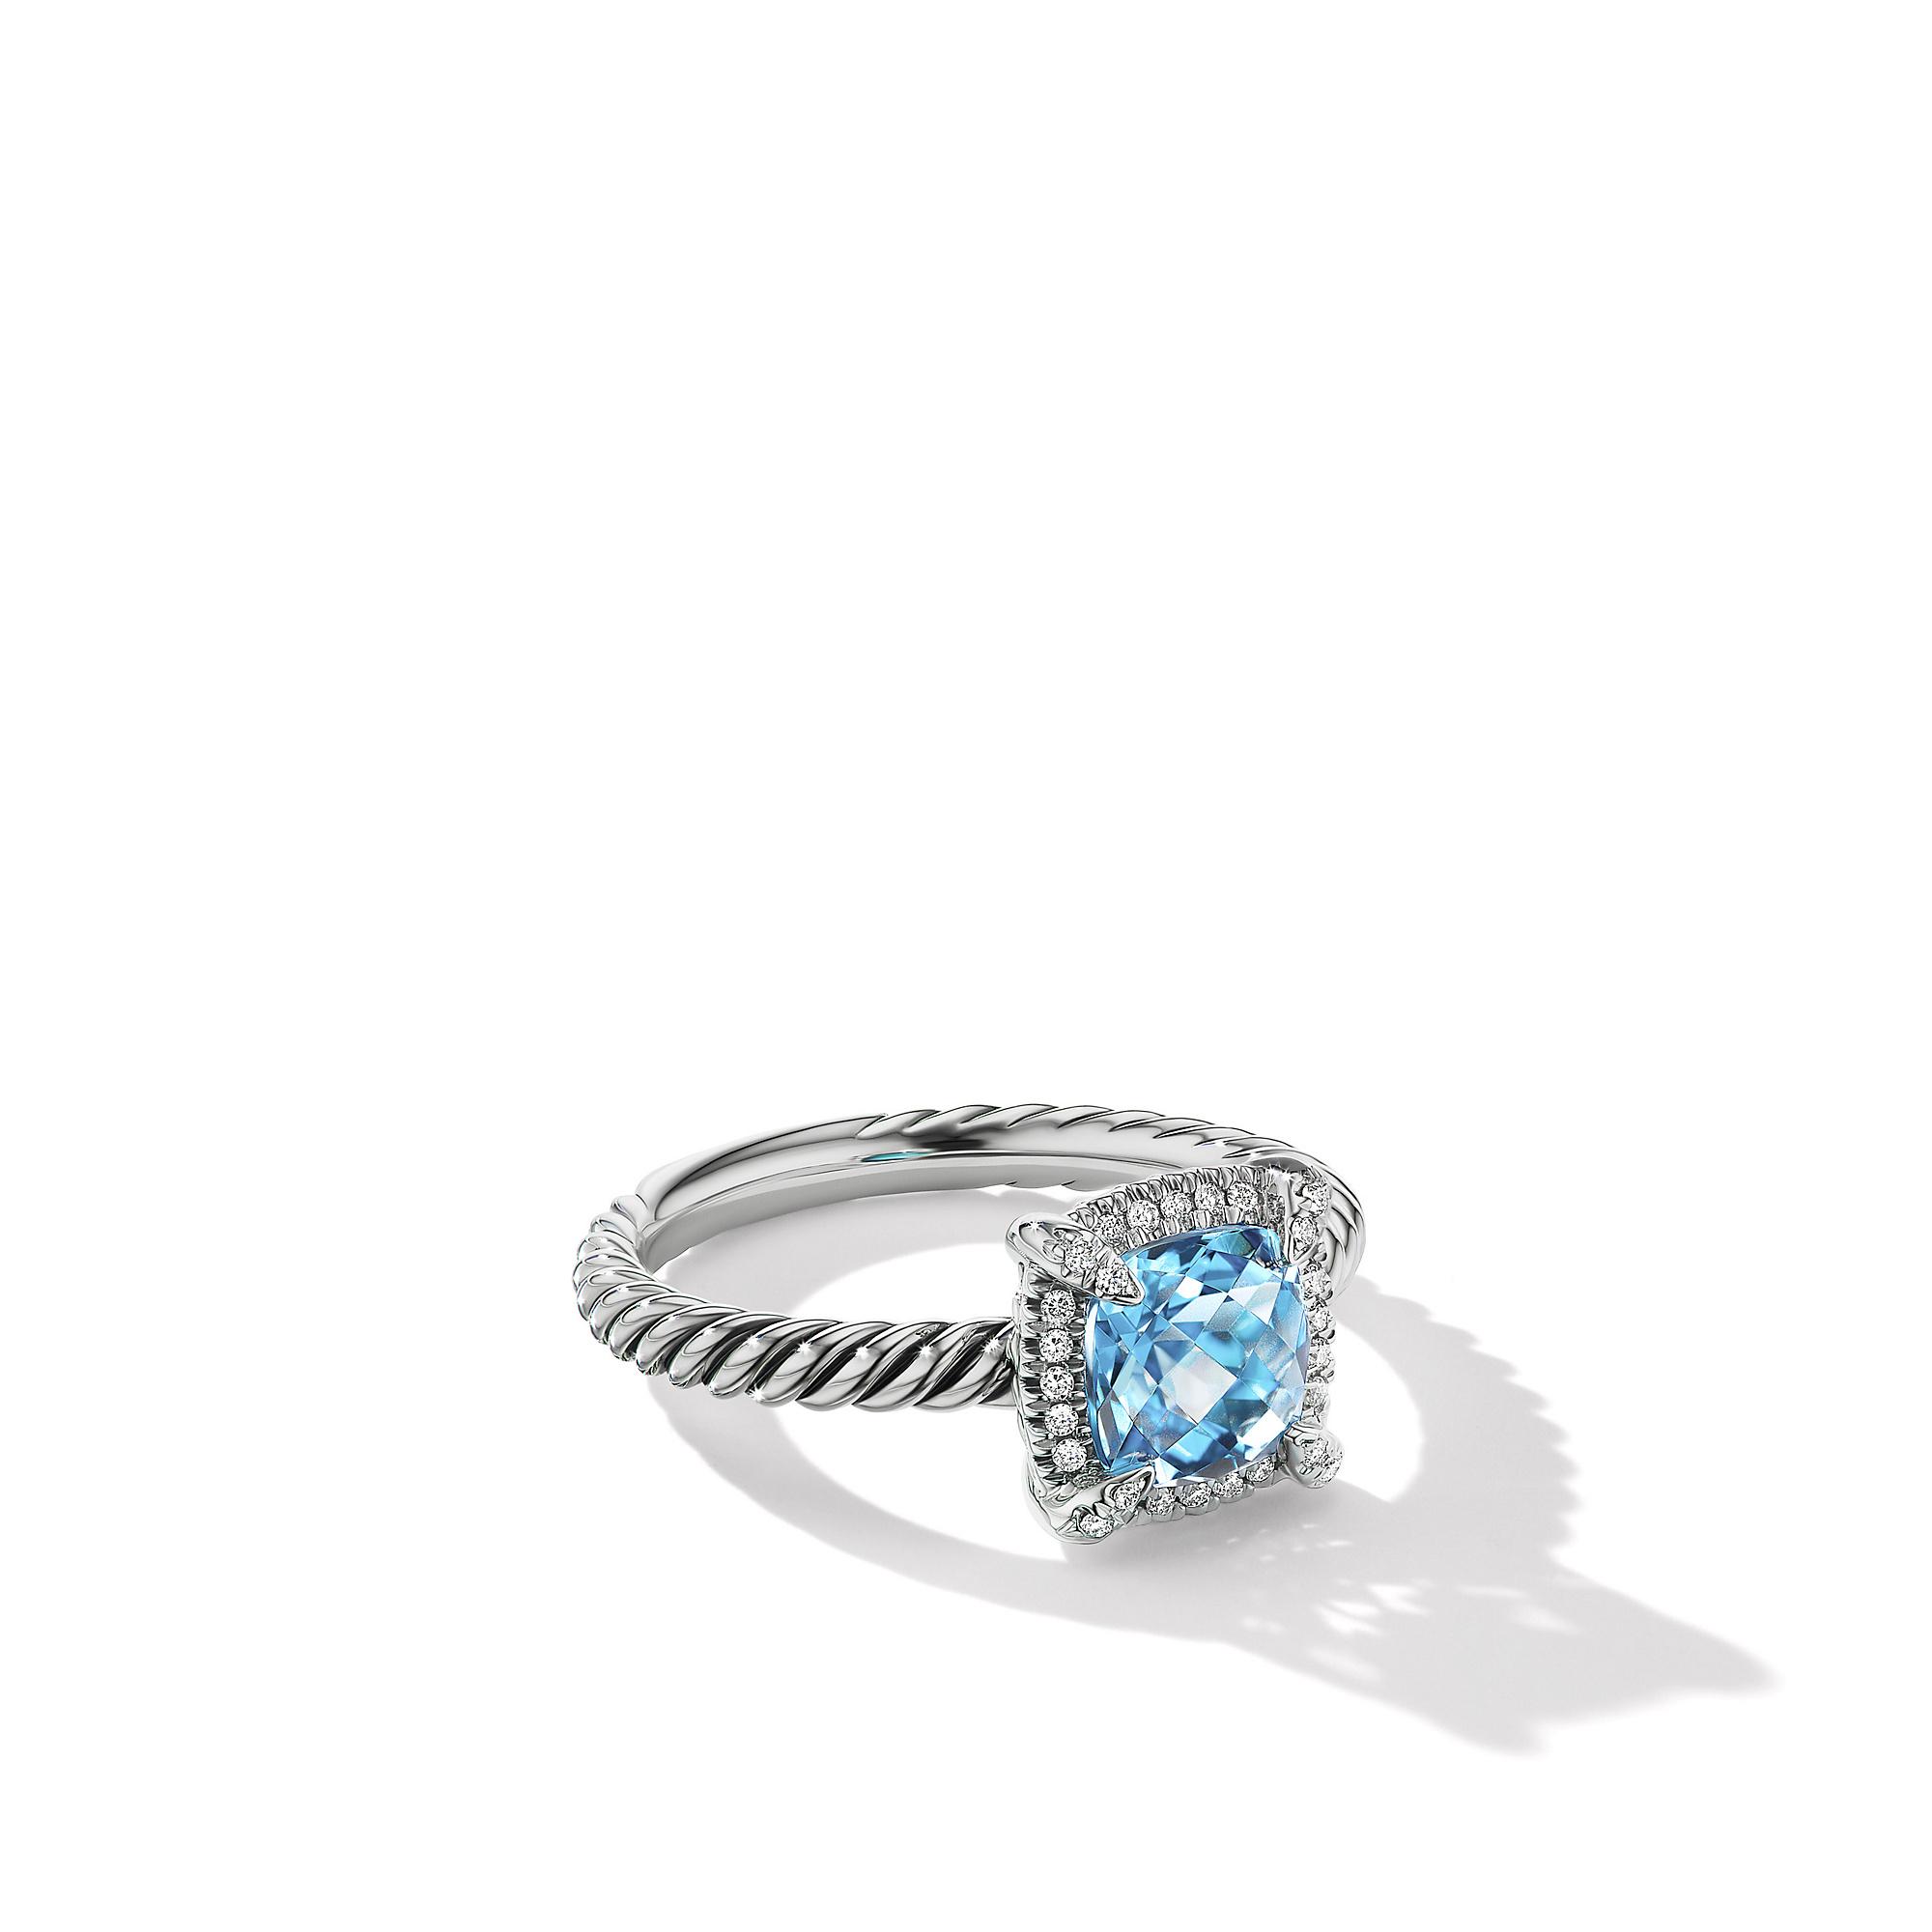 David Yurman Petite Chatelaine Pave Bezel Ring with Blue Topaz and Diamonds, size 5.5